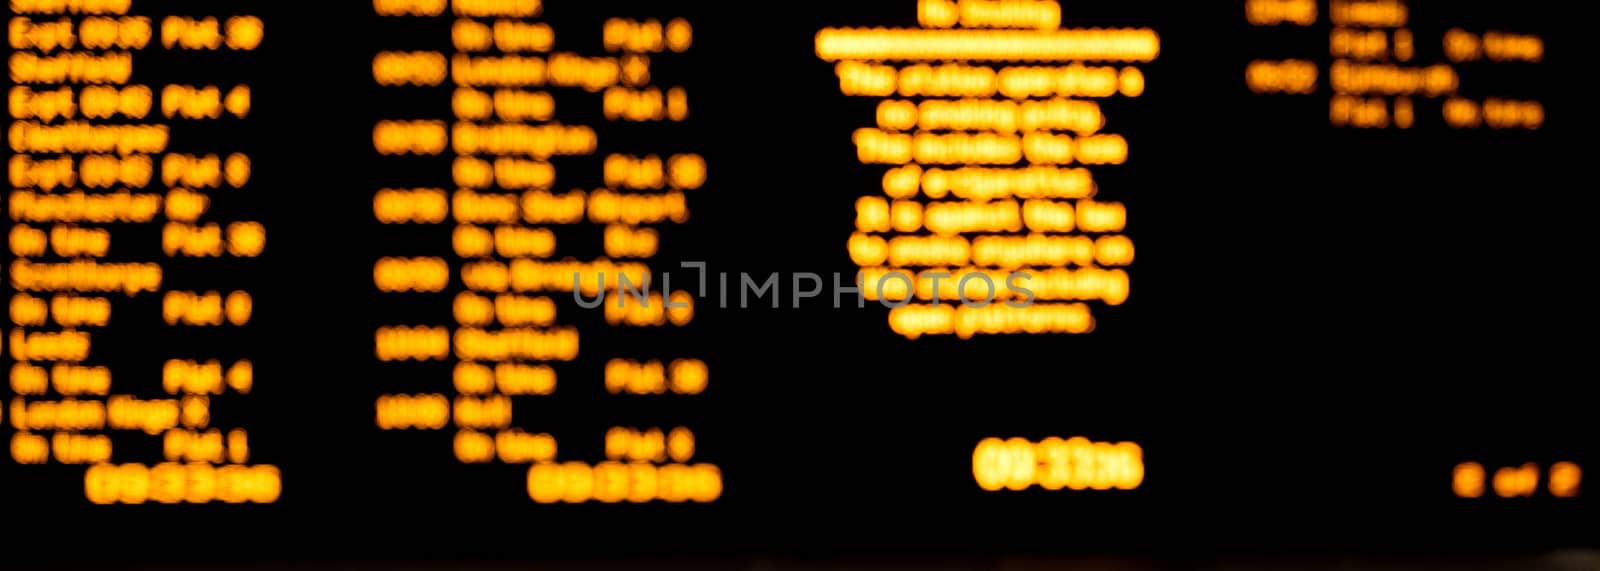 blurred led train schedule text on black background by Iryna_Melnyk